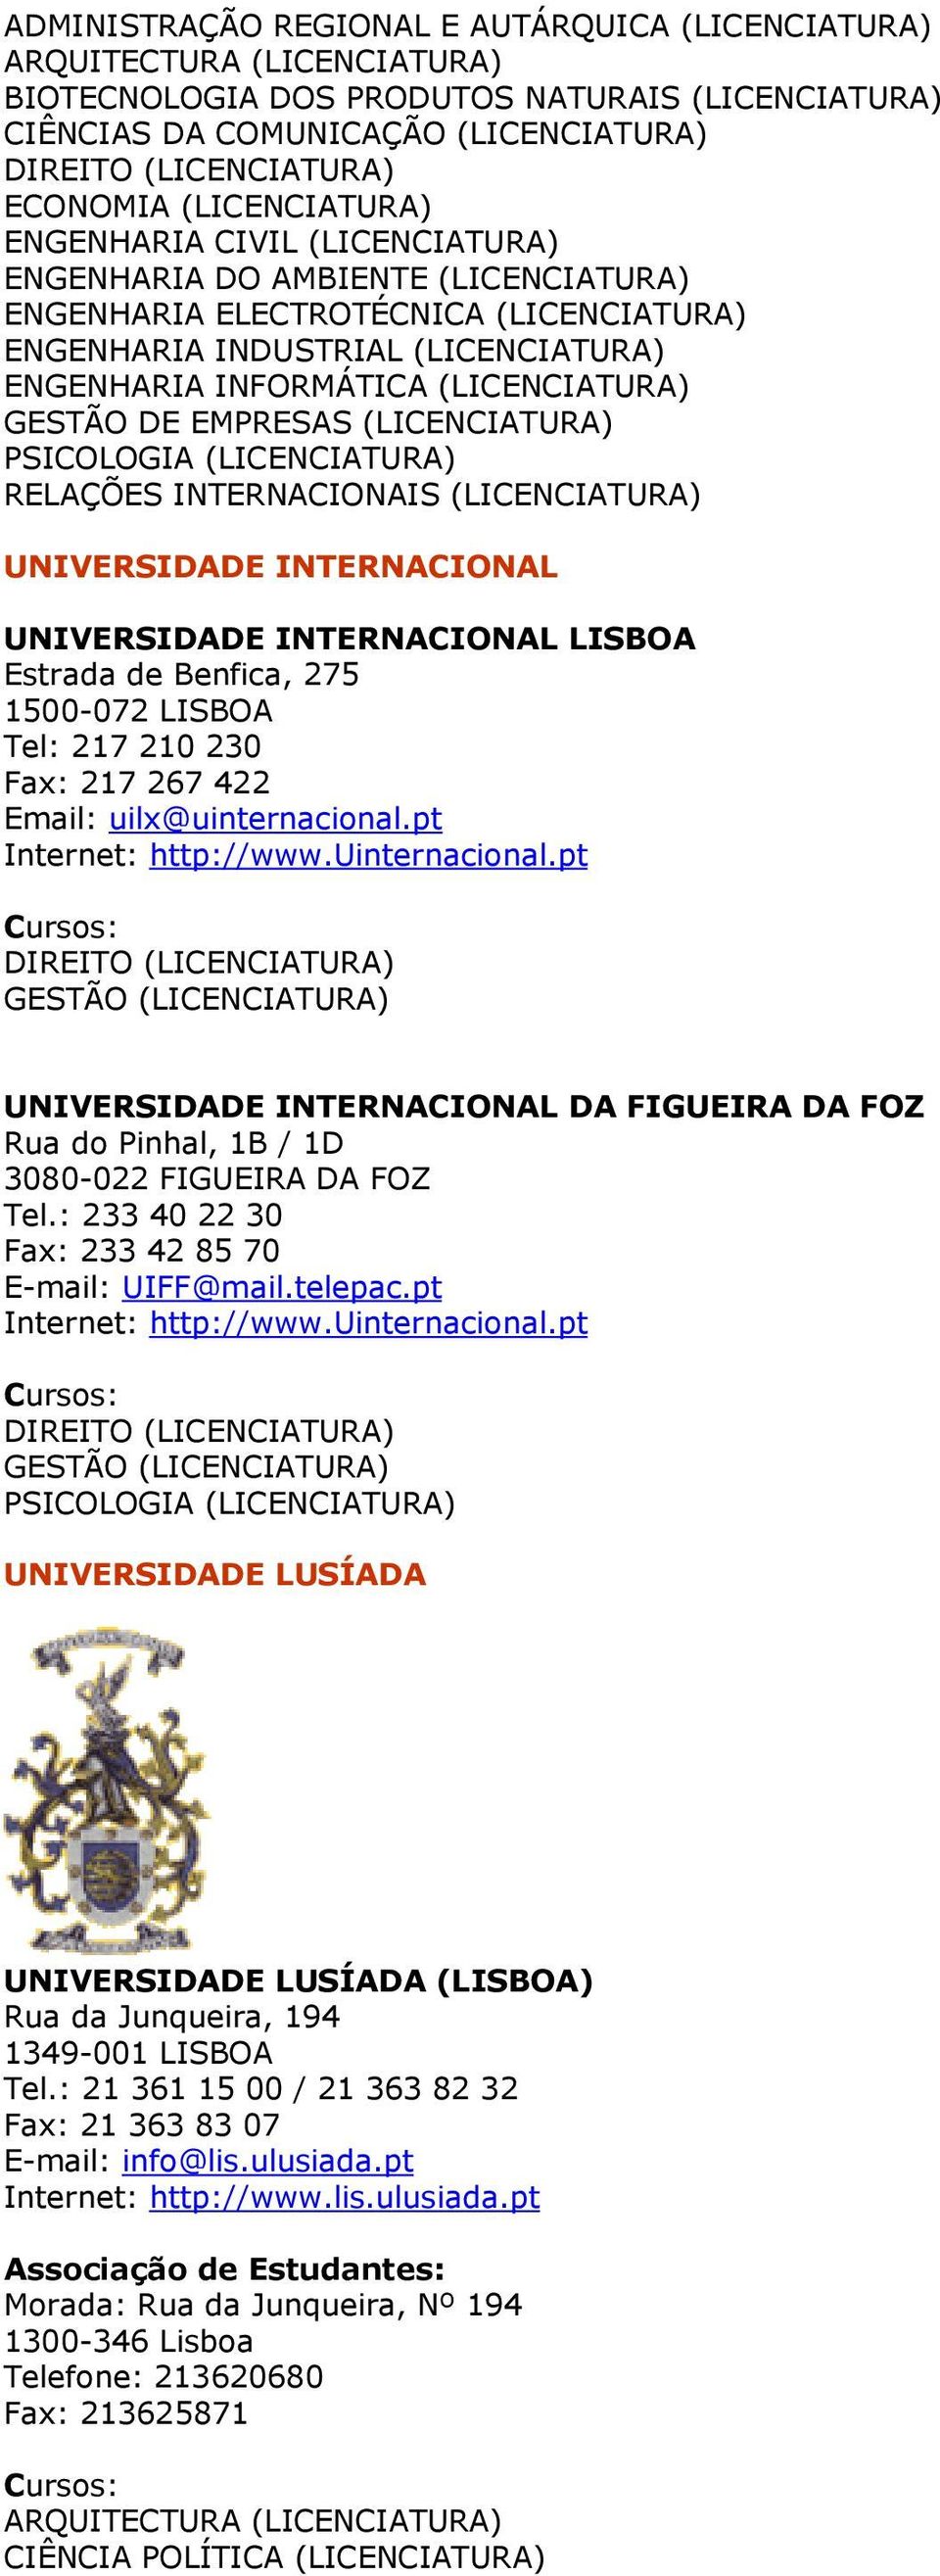 (LICENCIATURA) UNIVERSIDADE INTERNACIONAL UNIVERSIDADE INTERNACIONAL LISBOA Estrada de Benfica, 275 1500-072 LISBOA Tel: 217 210 230 Fax: 217 267 422 Email: uilx@uinternacional.